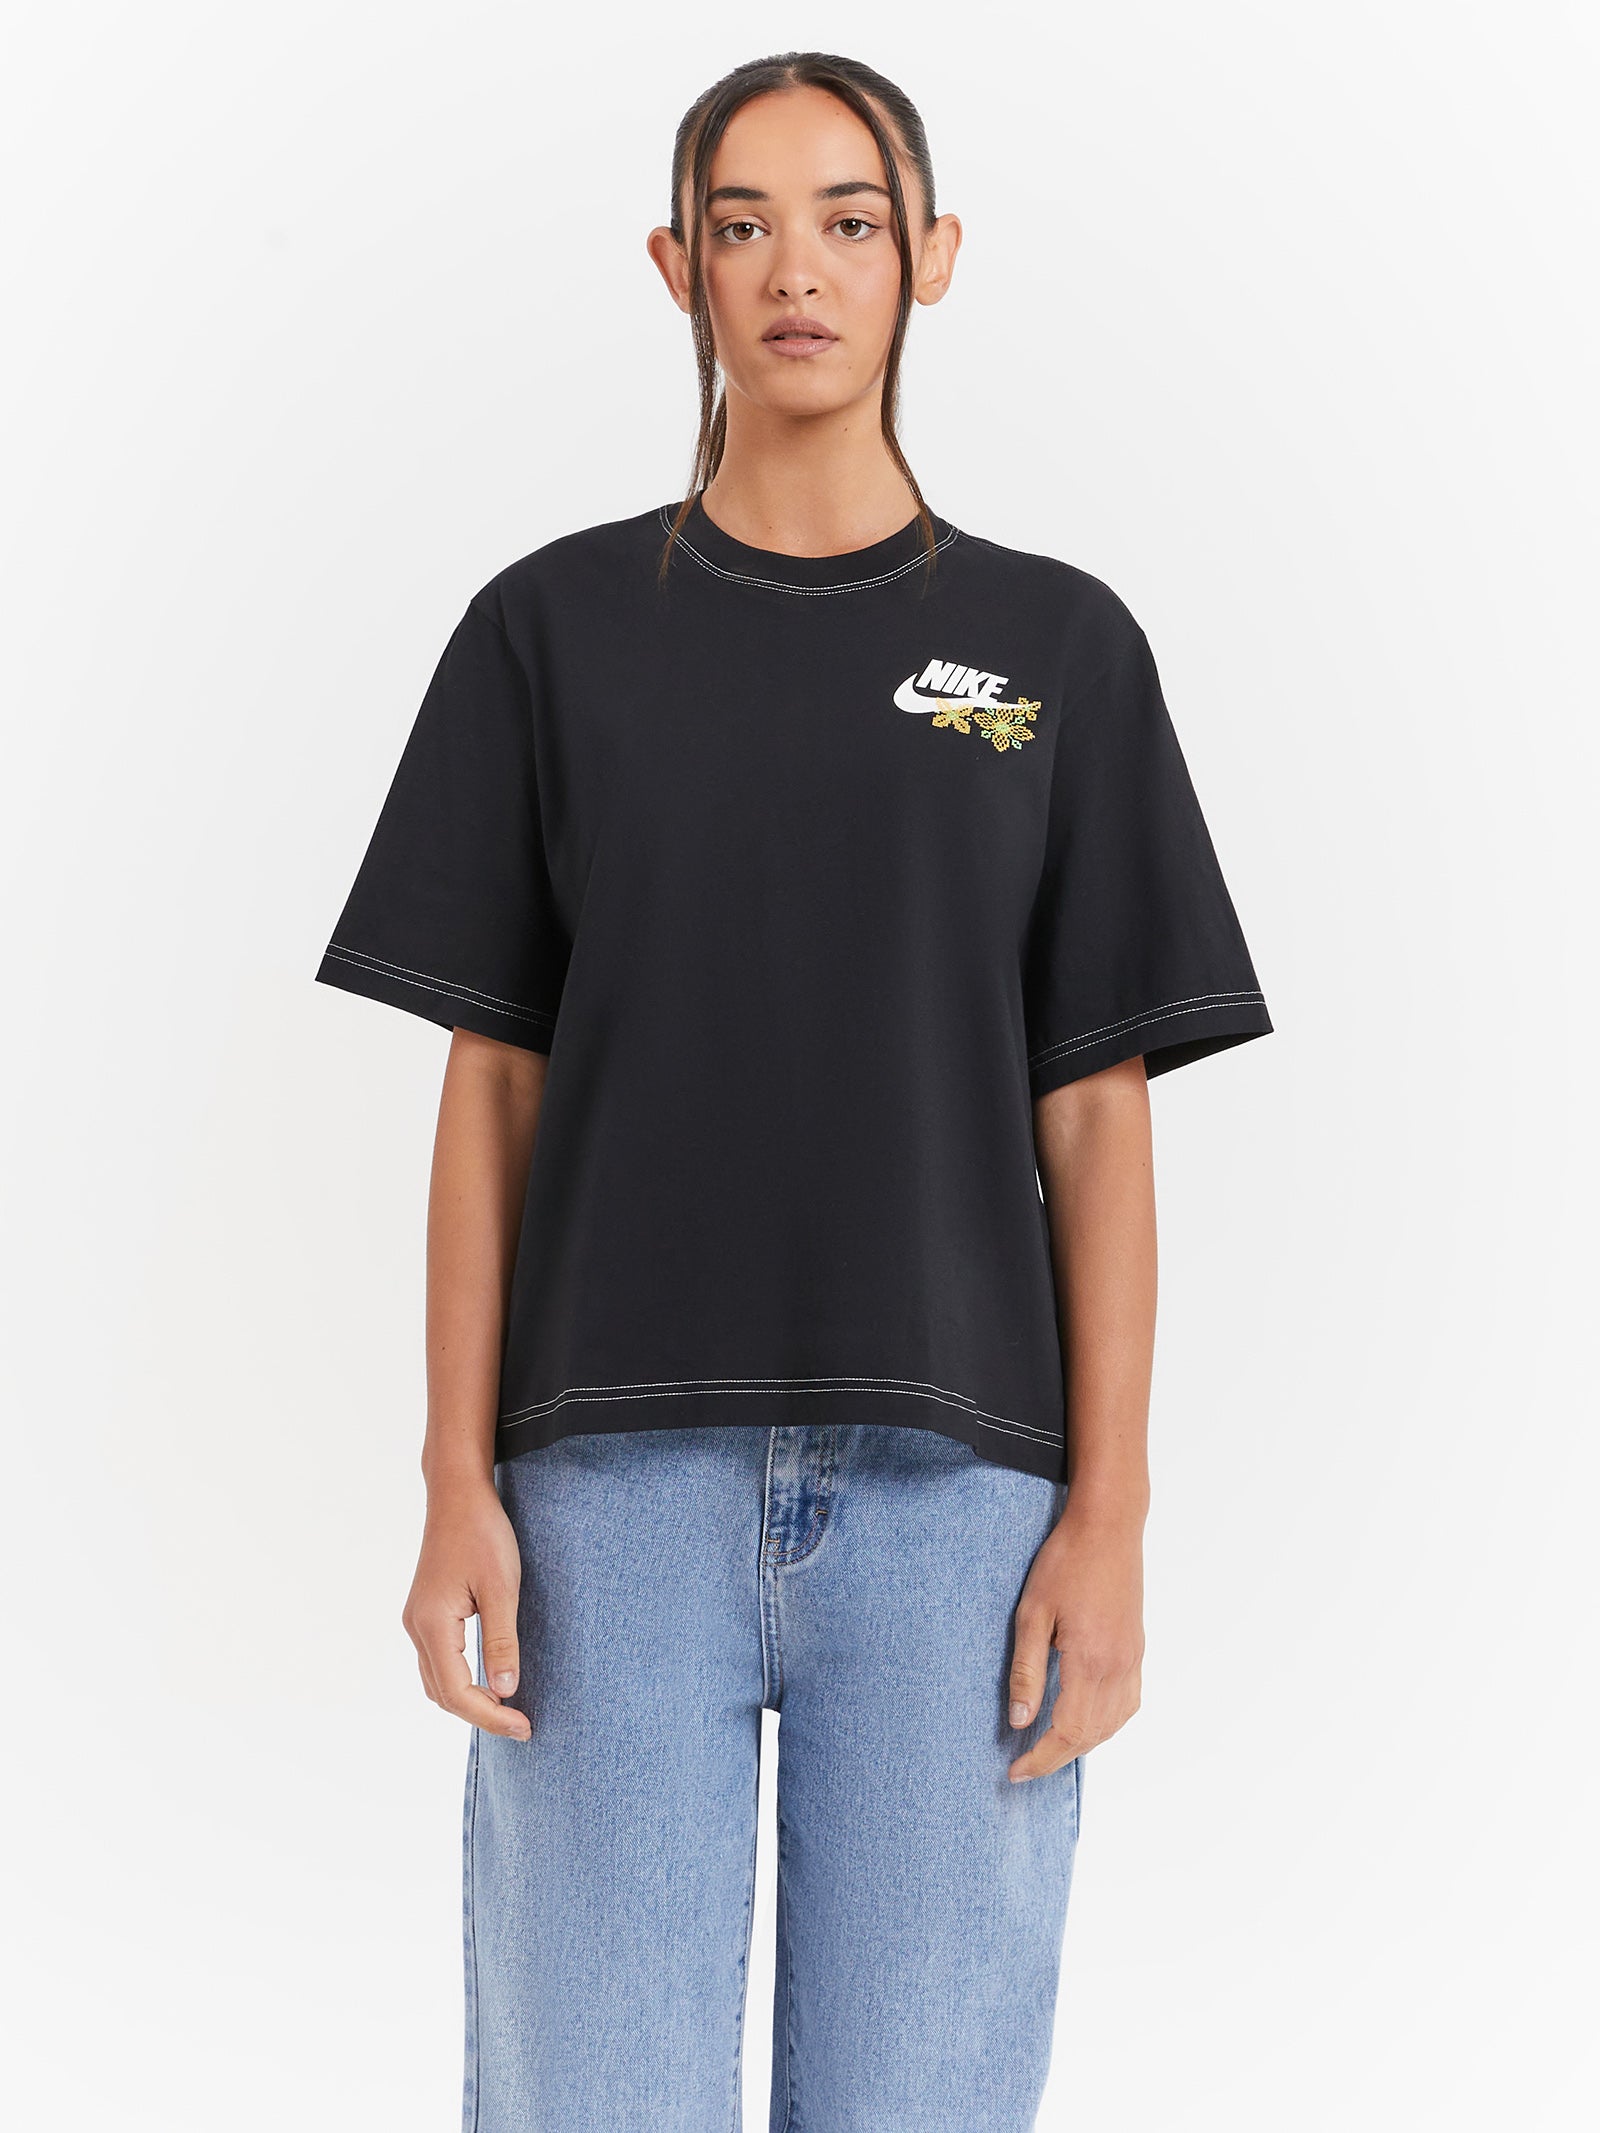 Sleeve Black Sportswear OC1 - Boxy in T-Shirt Glue Short Store